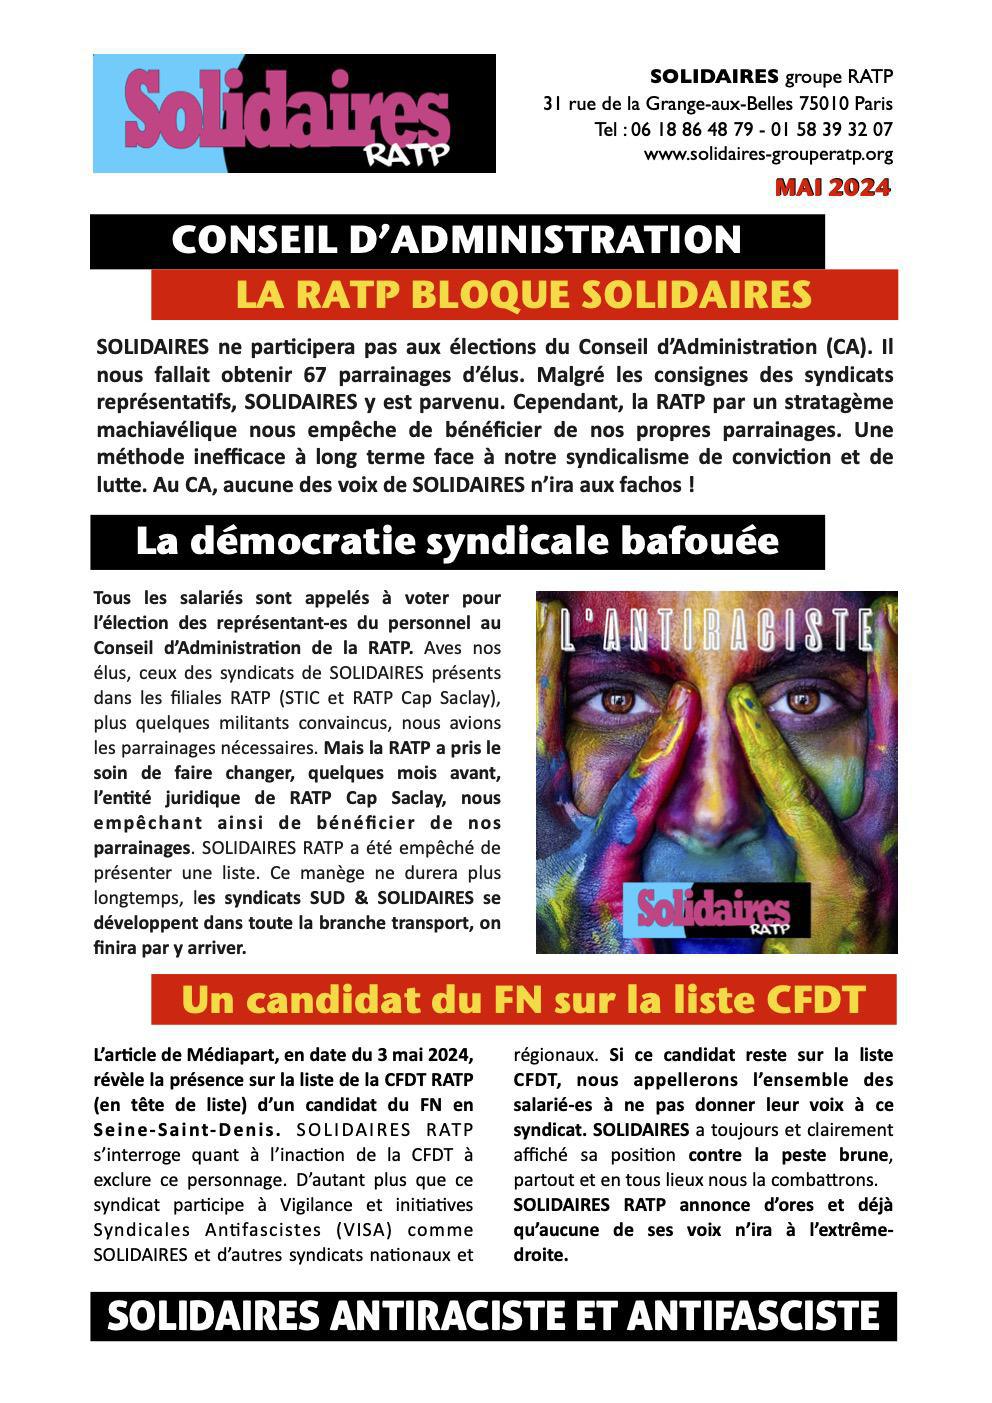 Solidaires RATP // Conseil d'administration, la RATP bloque Solidaires